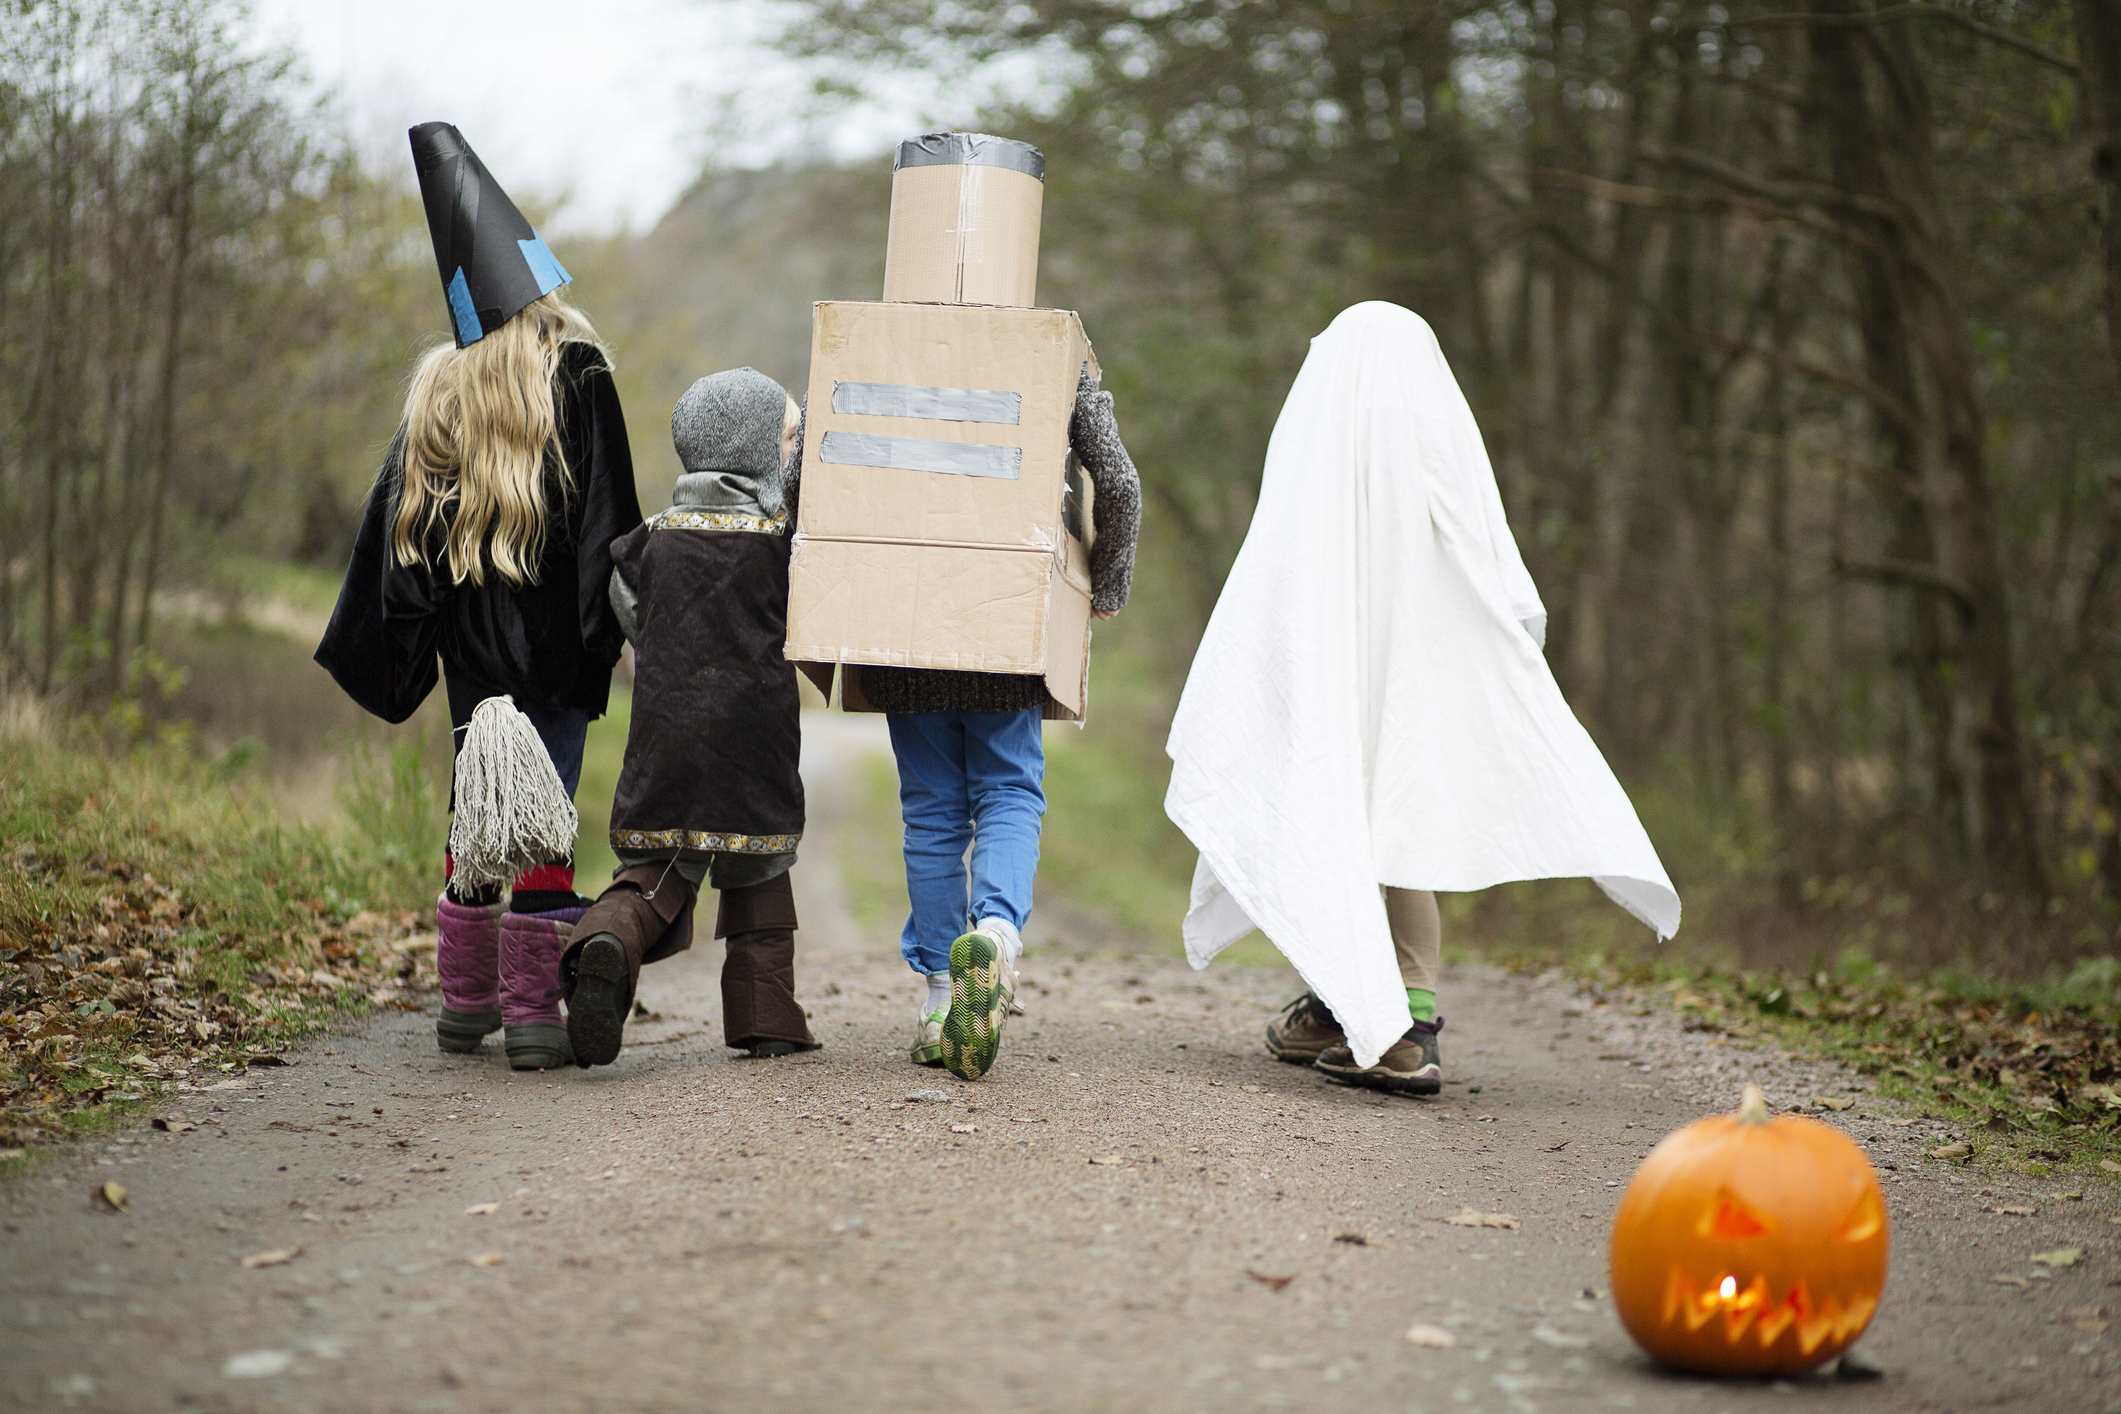 Children dressed up for Halloween